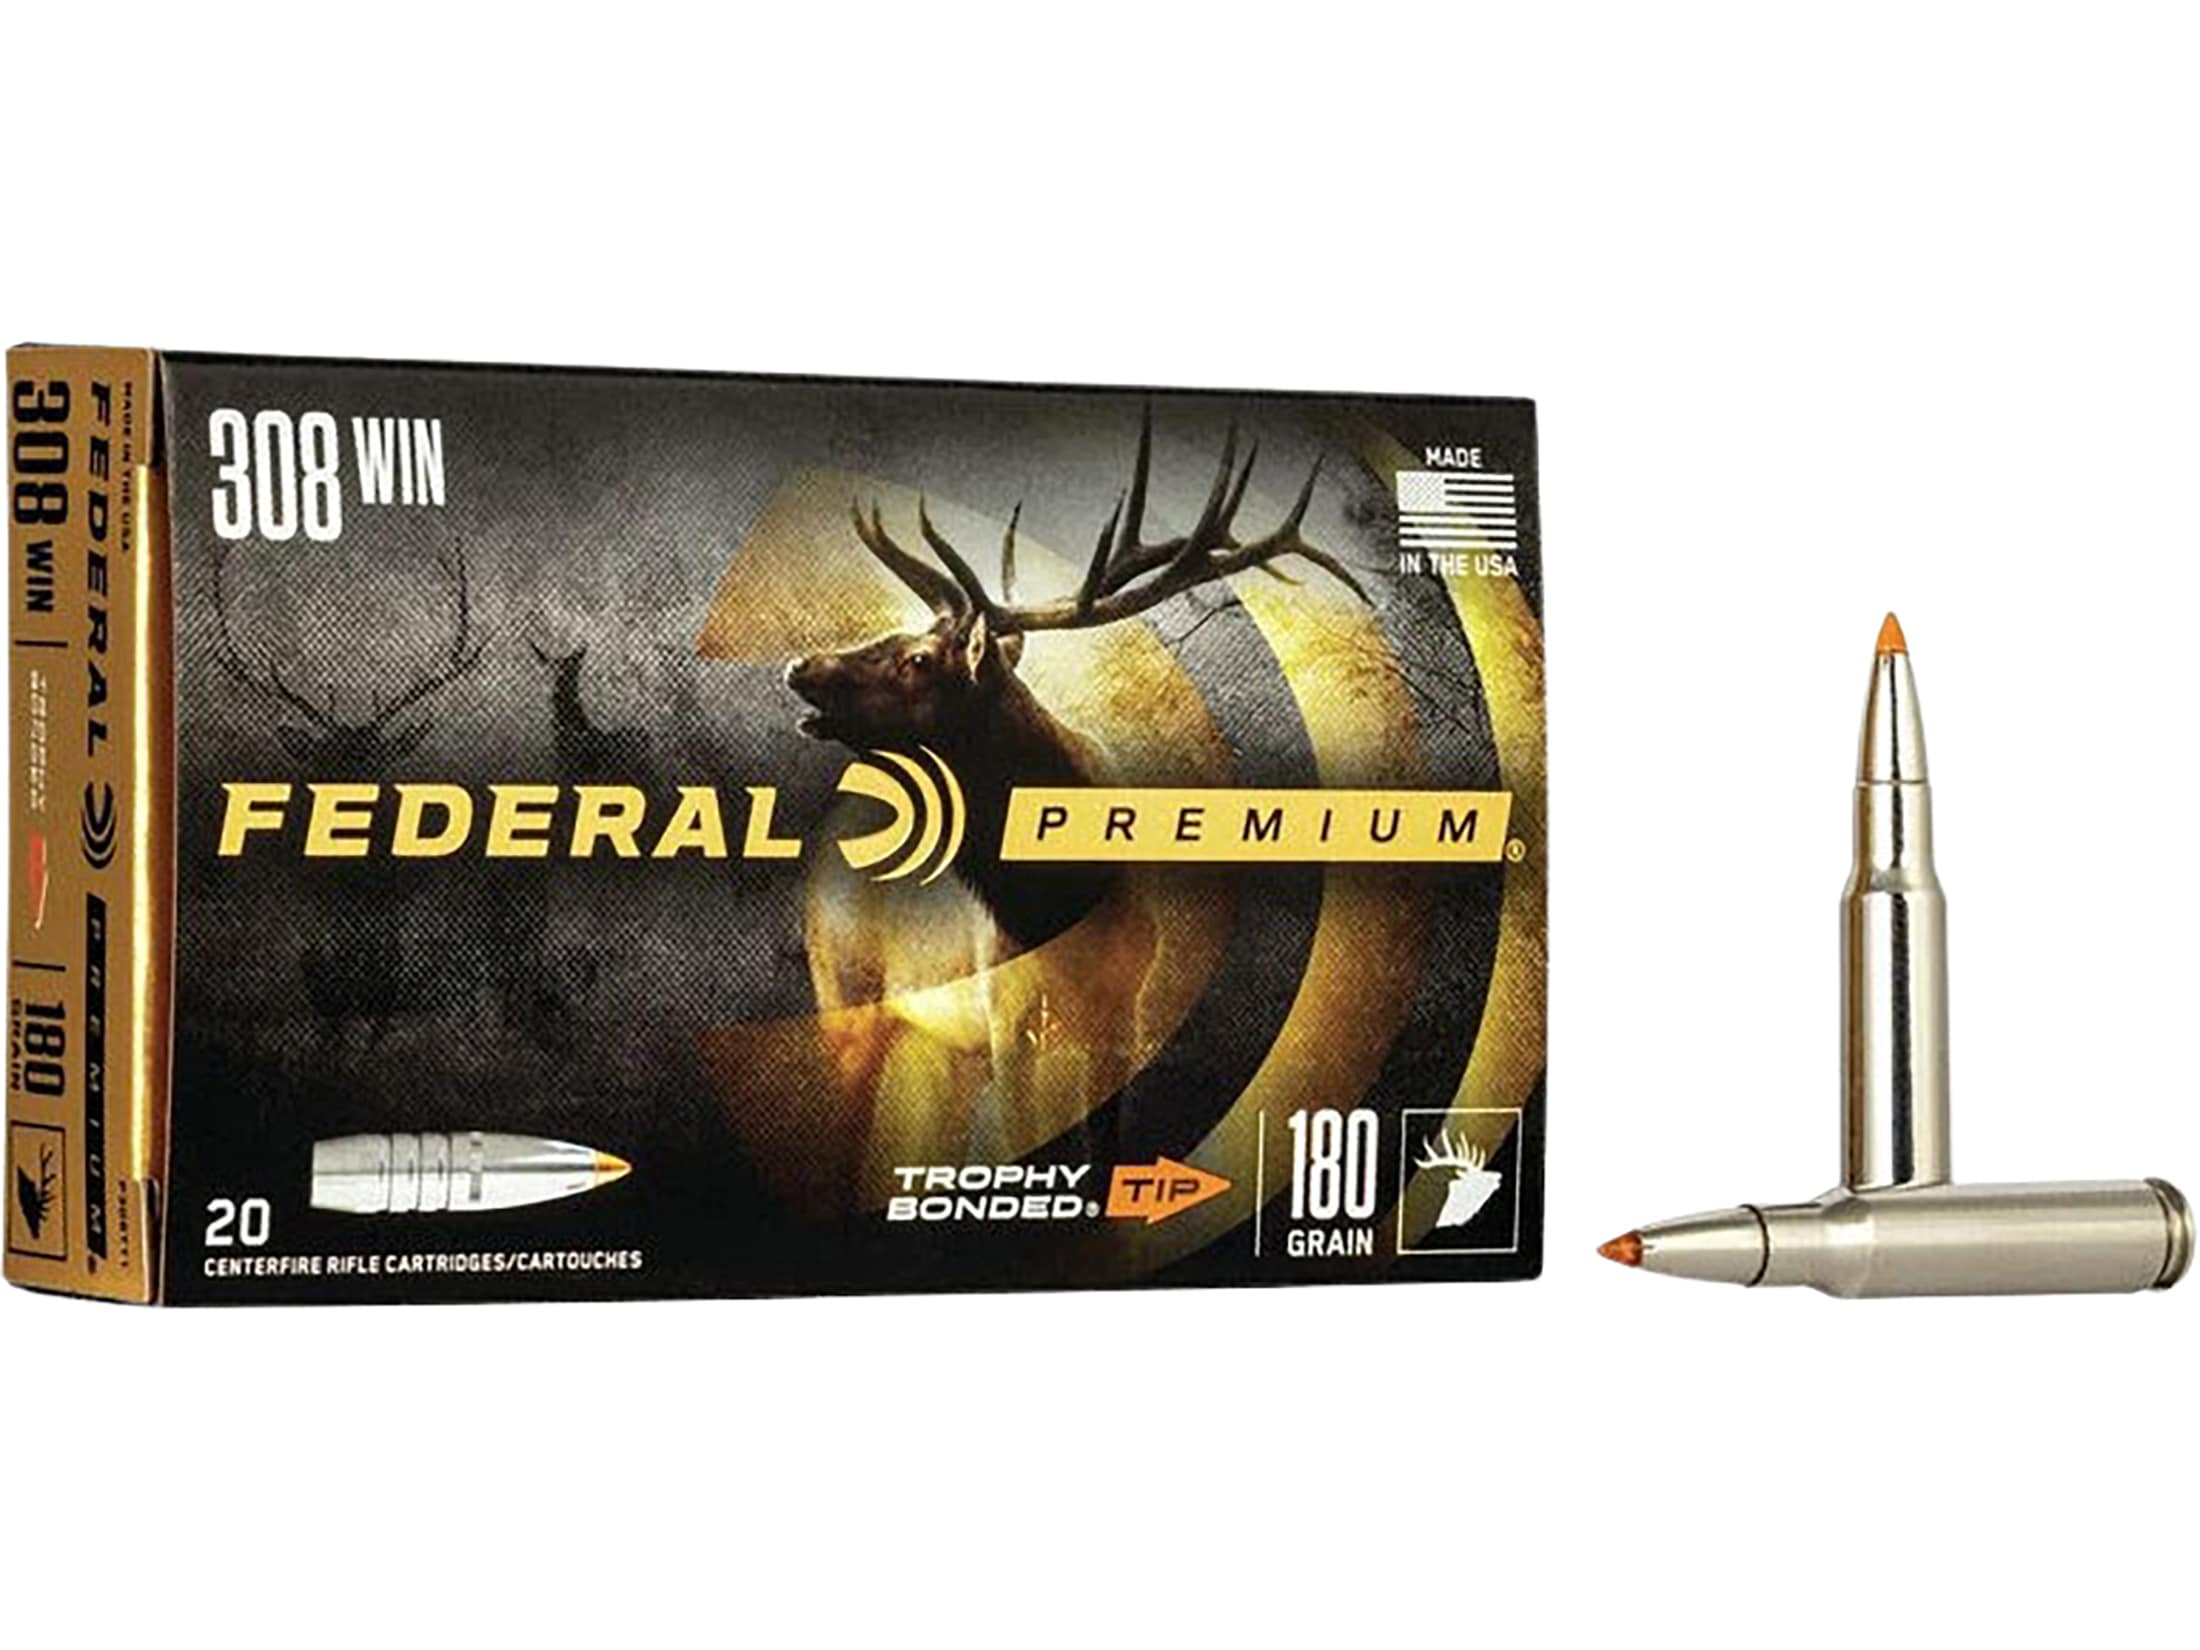 Federal Premium Ammunition 308 Winchester 180 Grain Trophy Bonded Tip